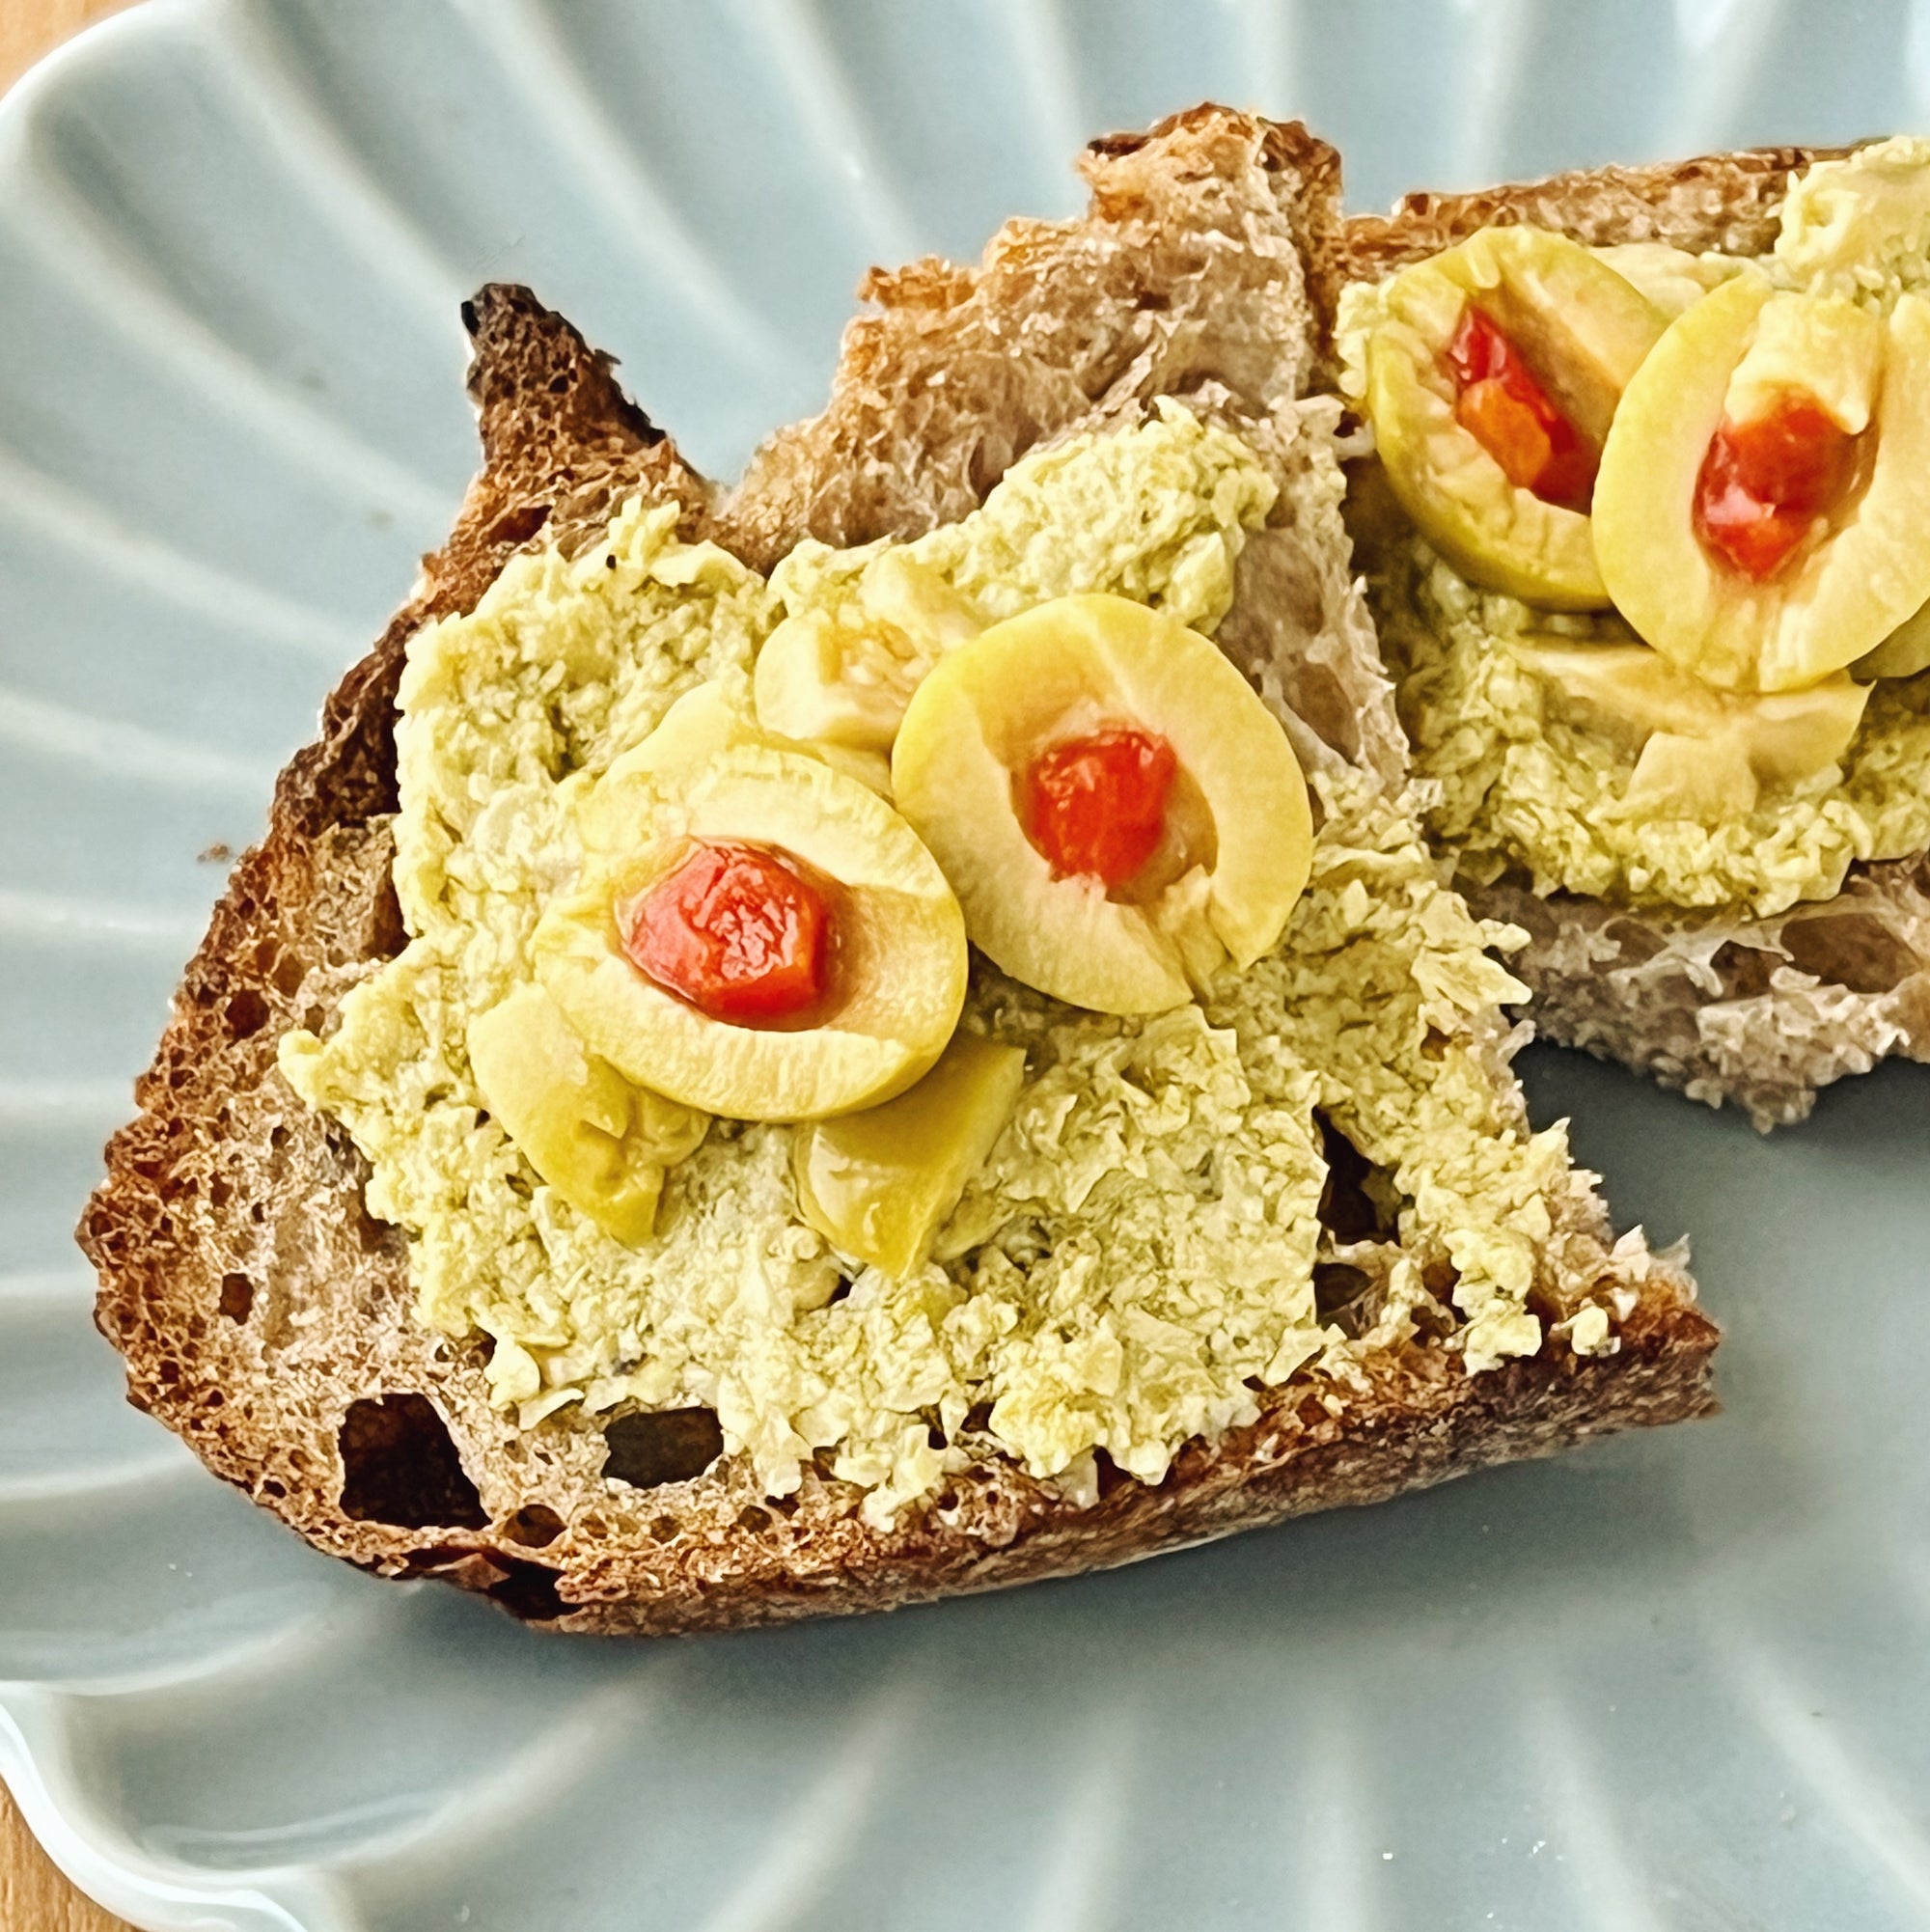 Baby broad beans hummus with olives - habitas hummus - Donostia Foods